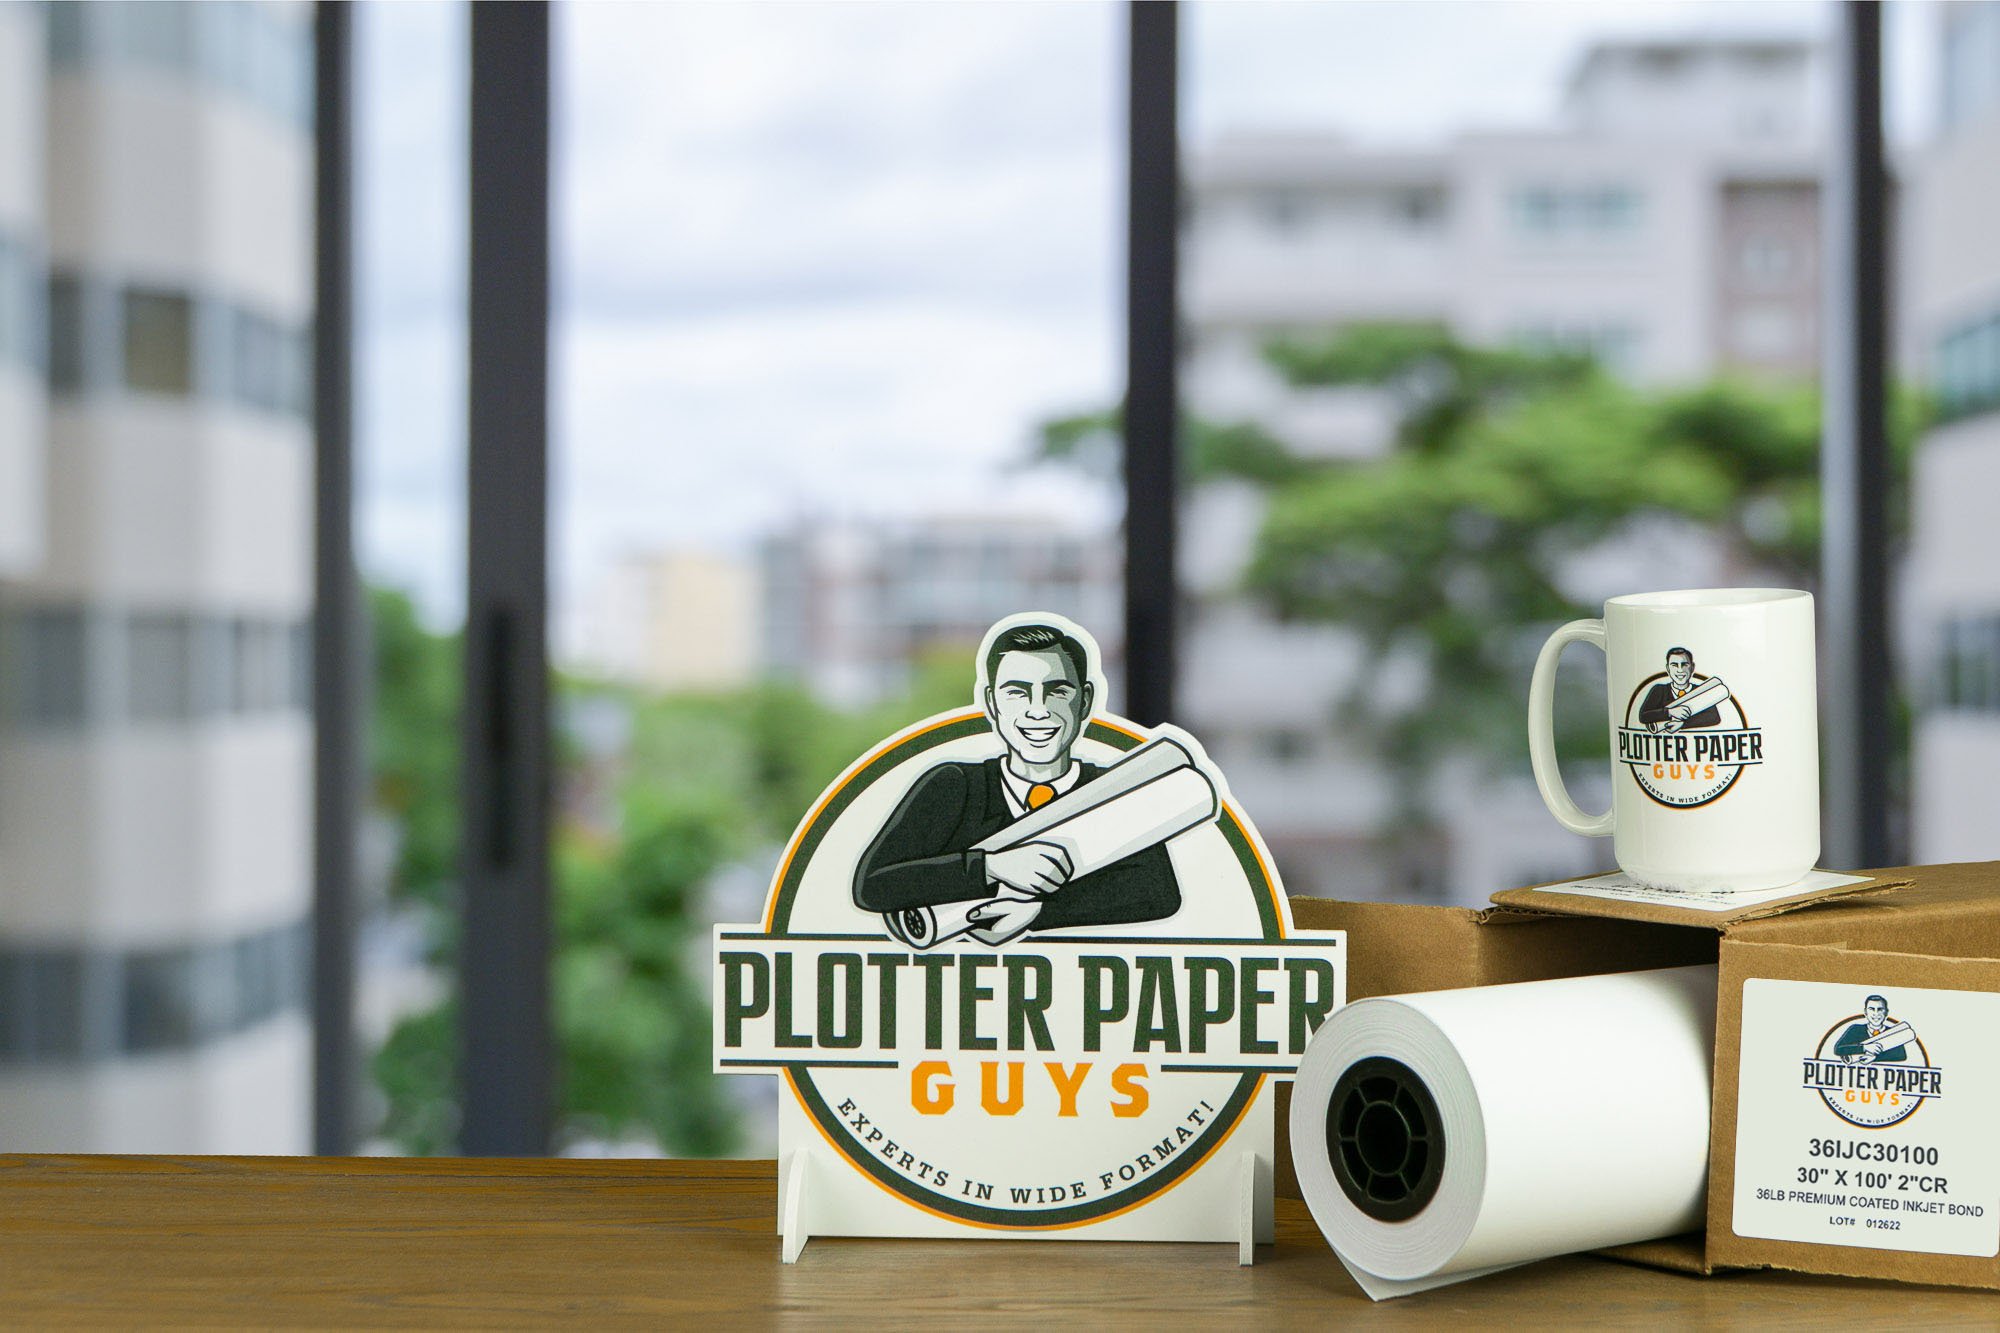 32 lb Uncoated Bond Paper - 36 x 300' - Plotter Paper Guys